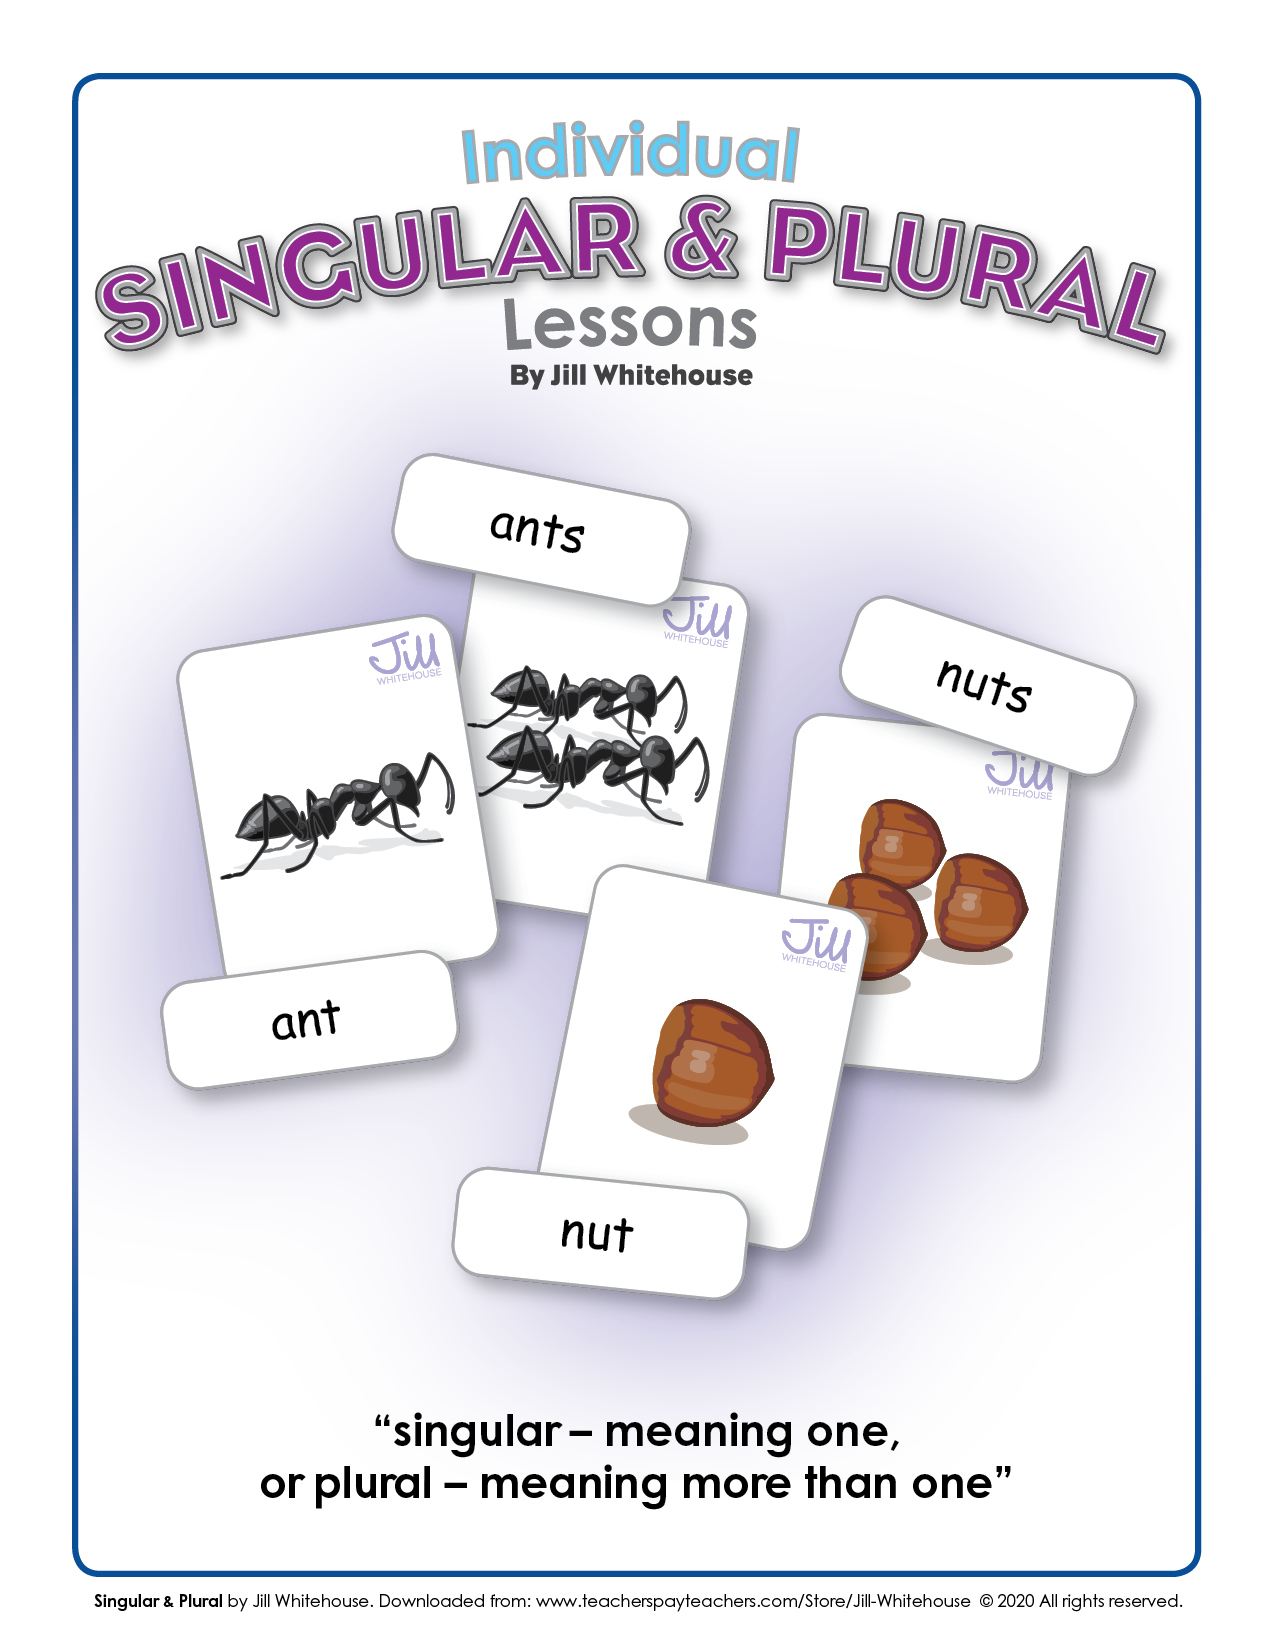 Cover image of singular & Plural download